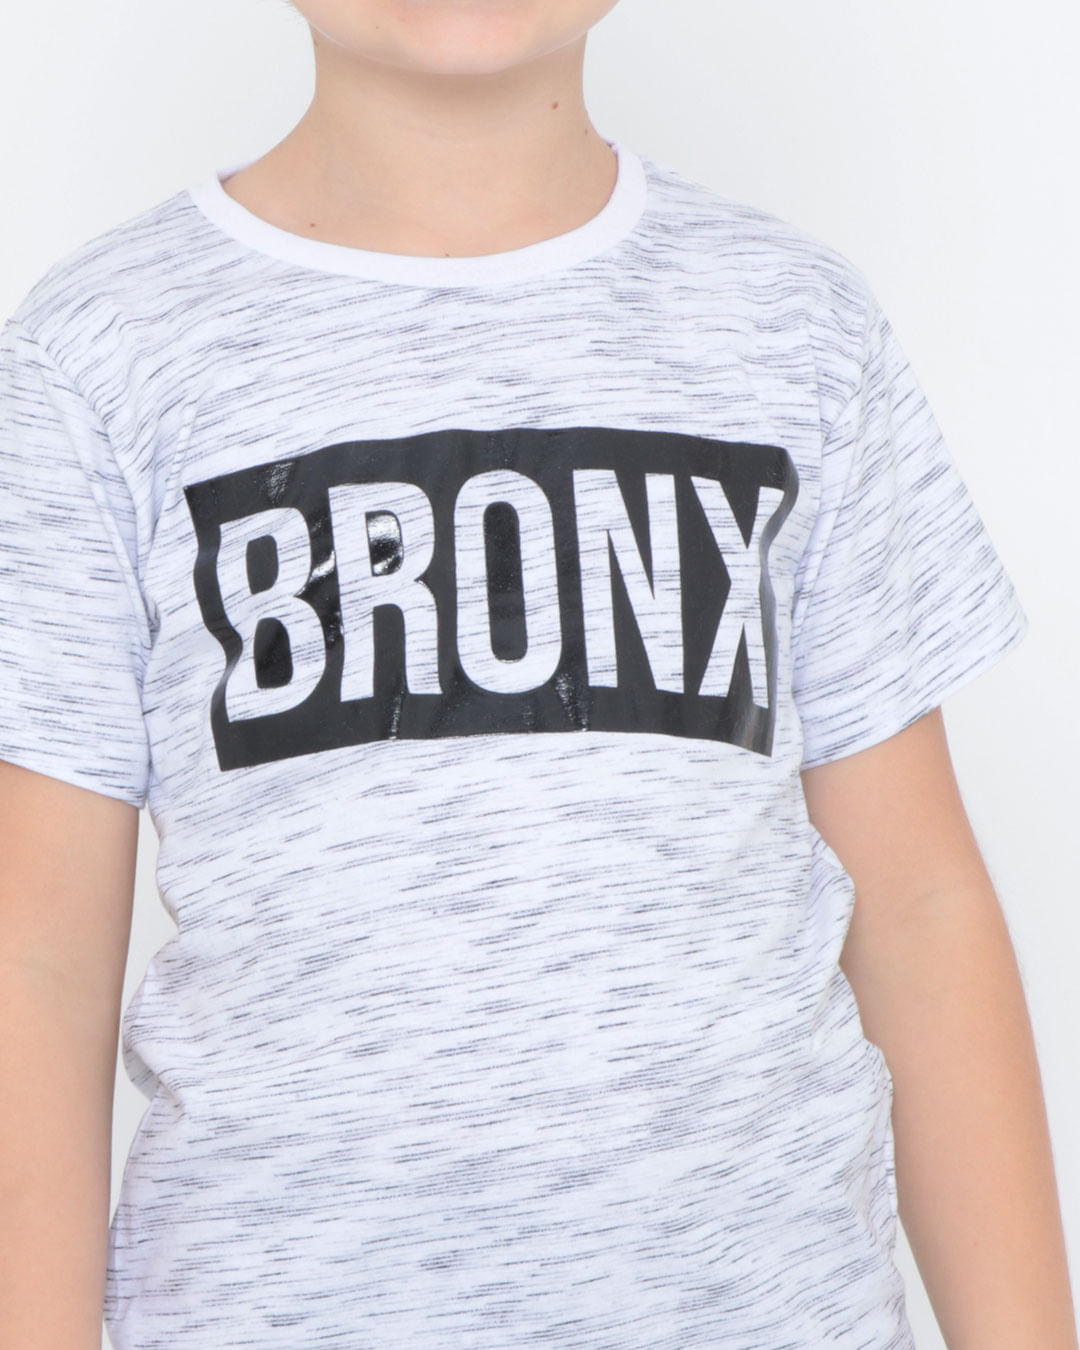 Camiseta-Infantil-Flame-Bronx-Branca